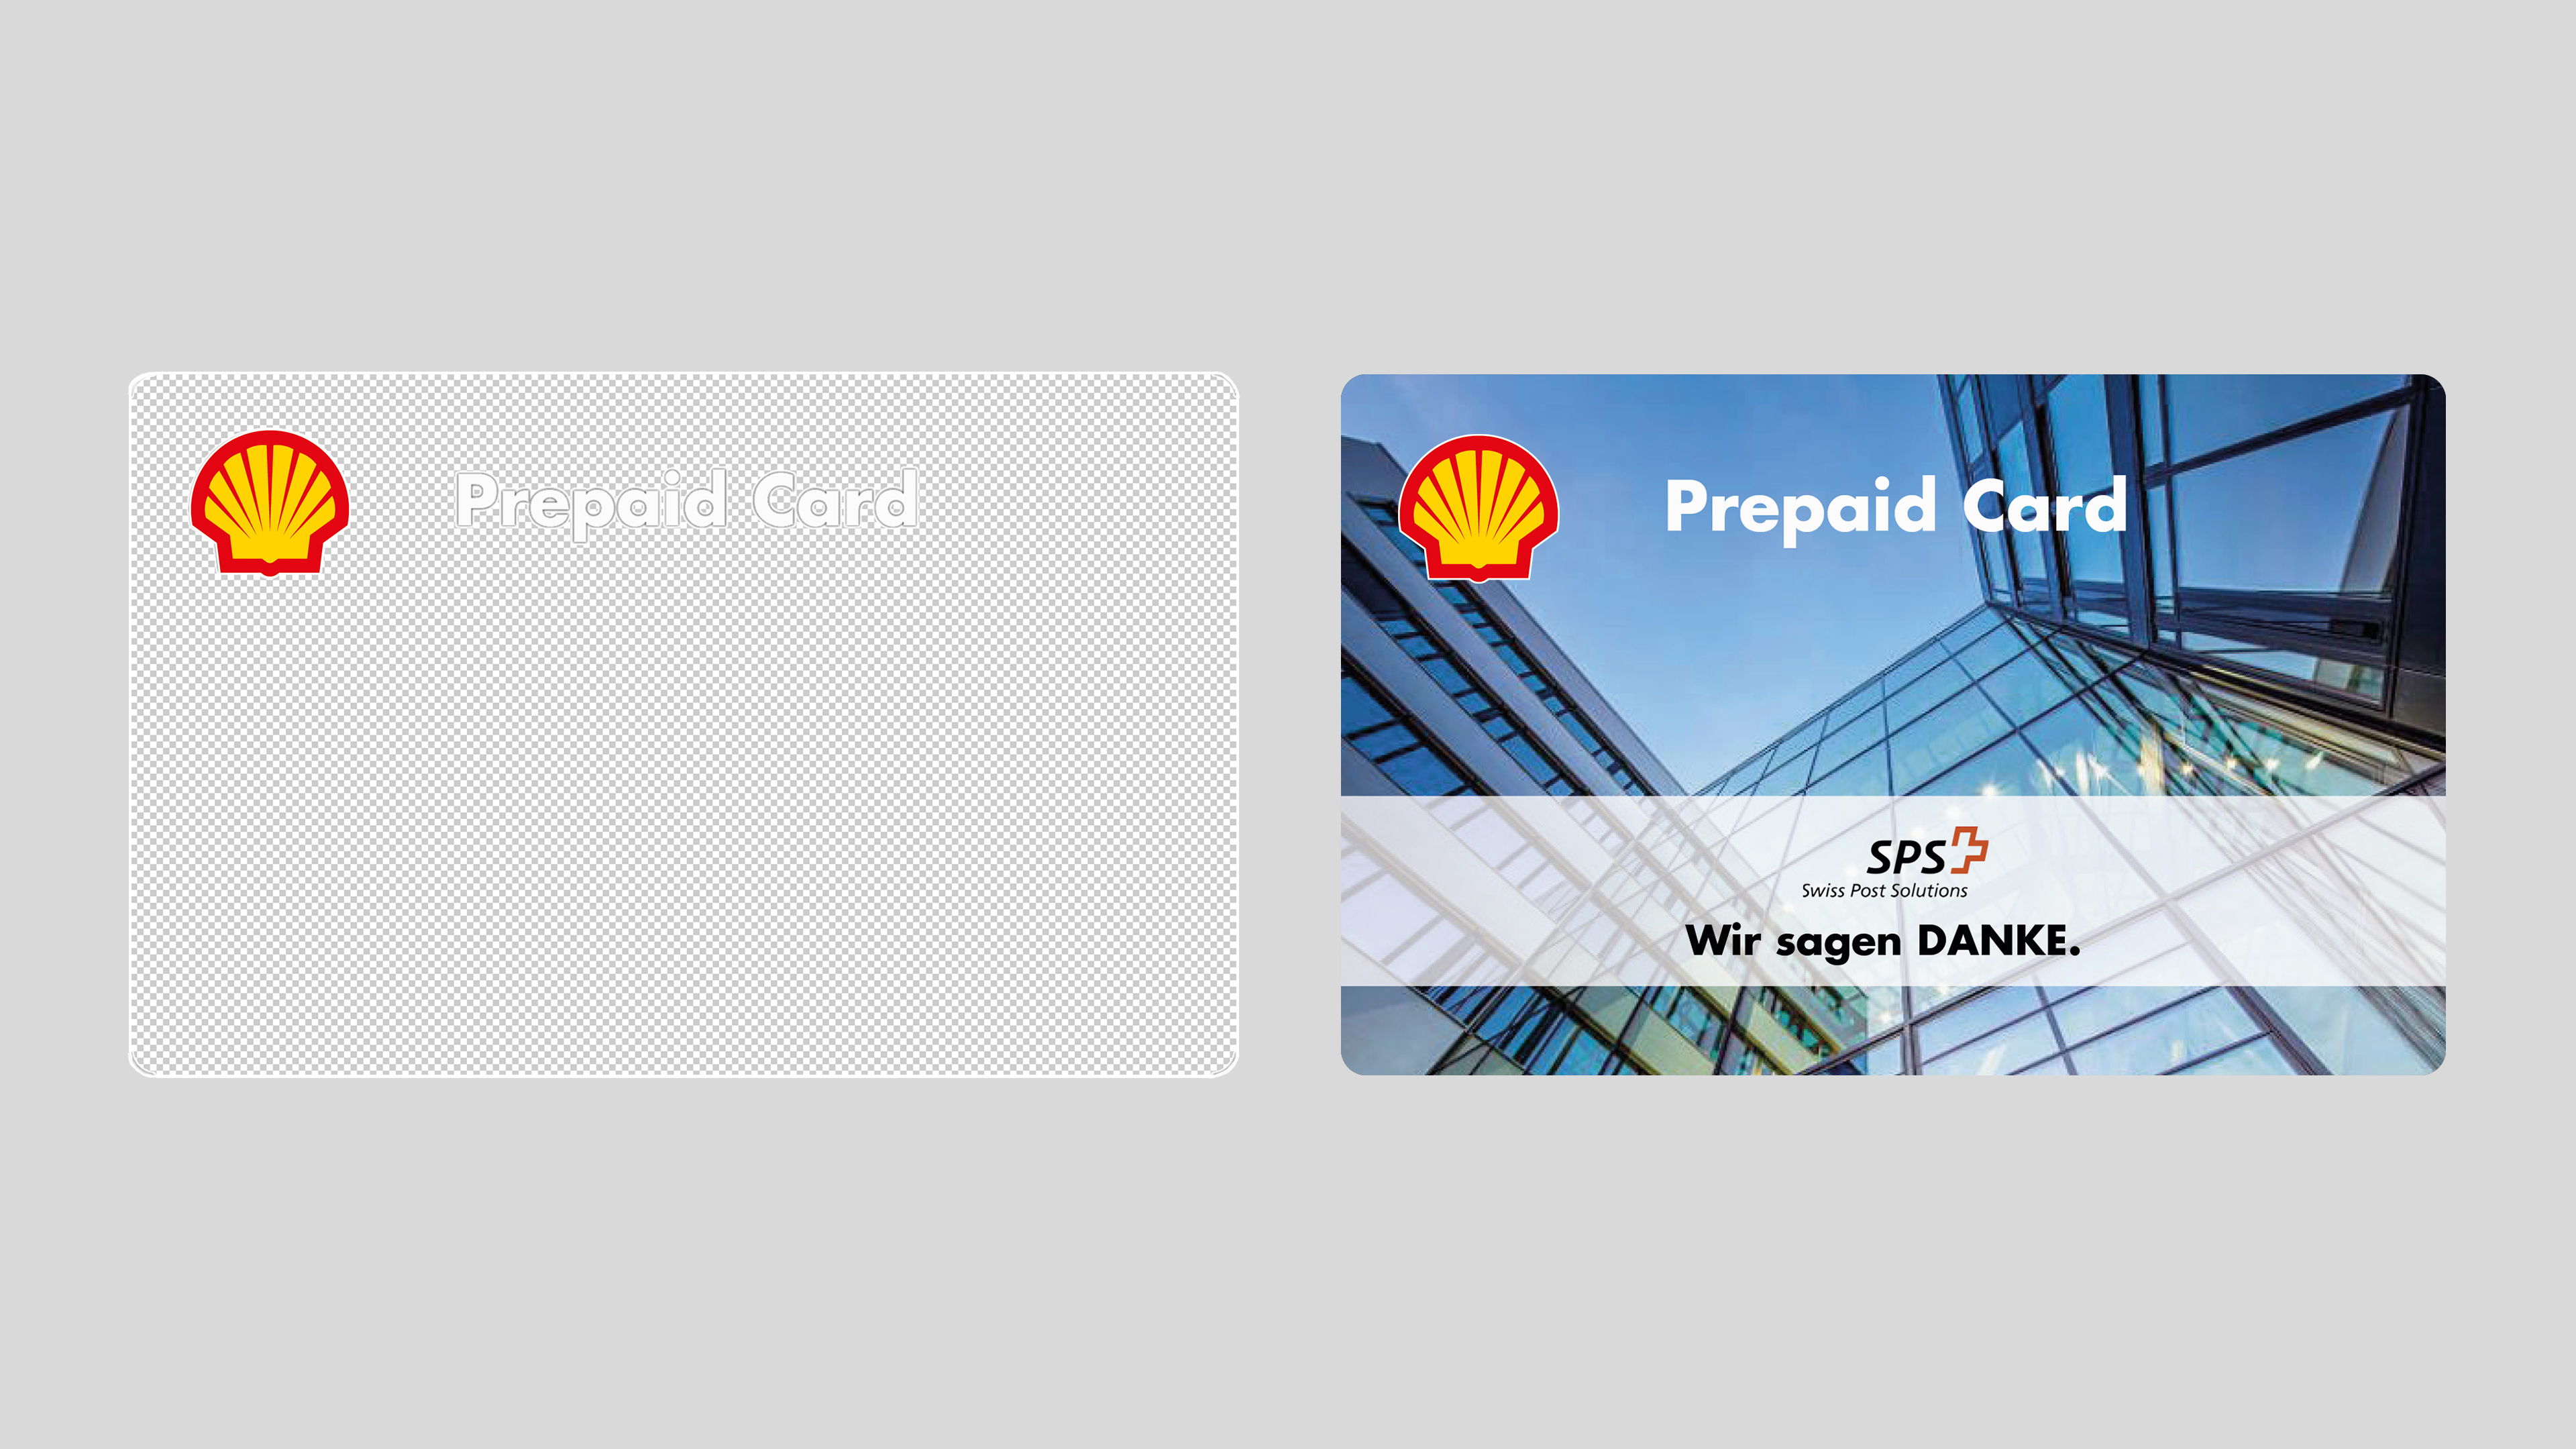 Shell Prepaid Card Sonderedition